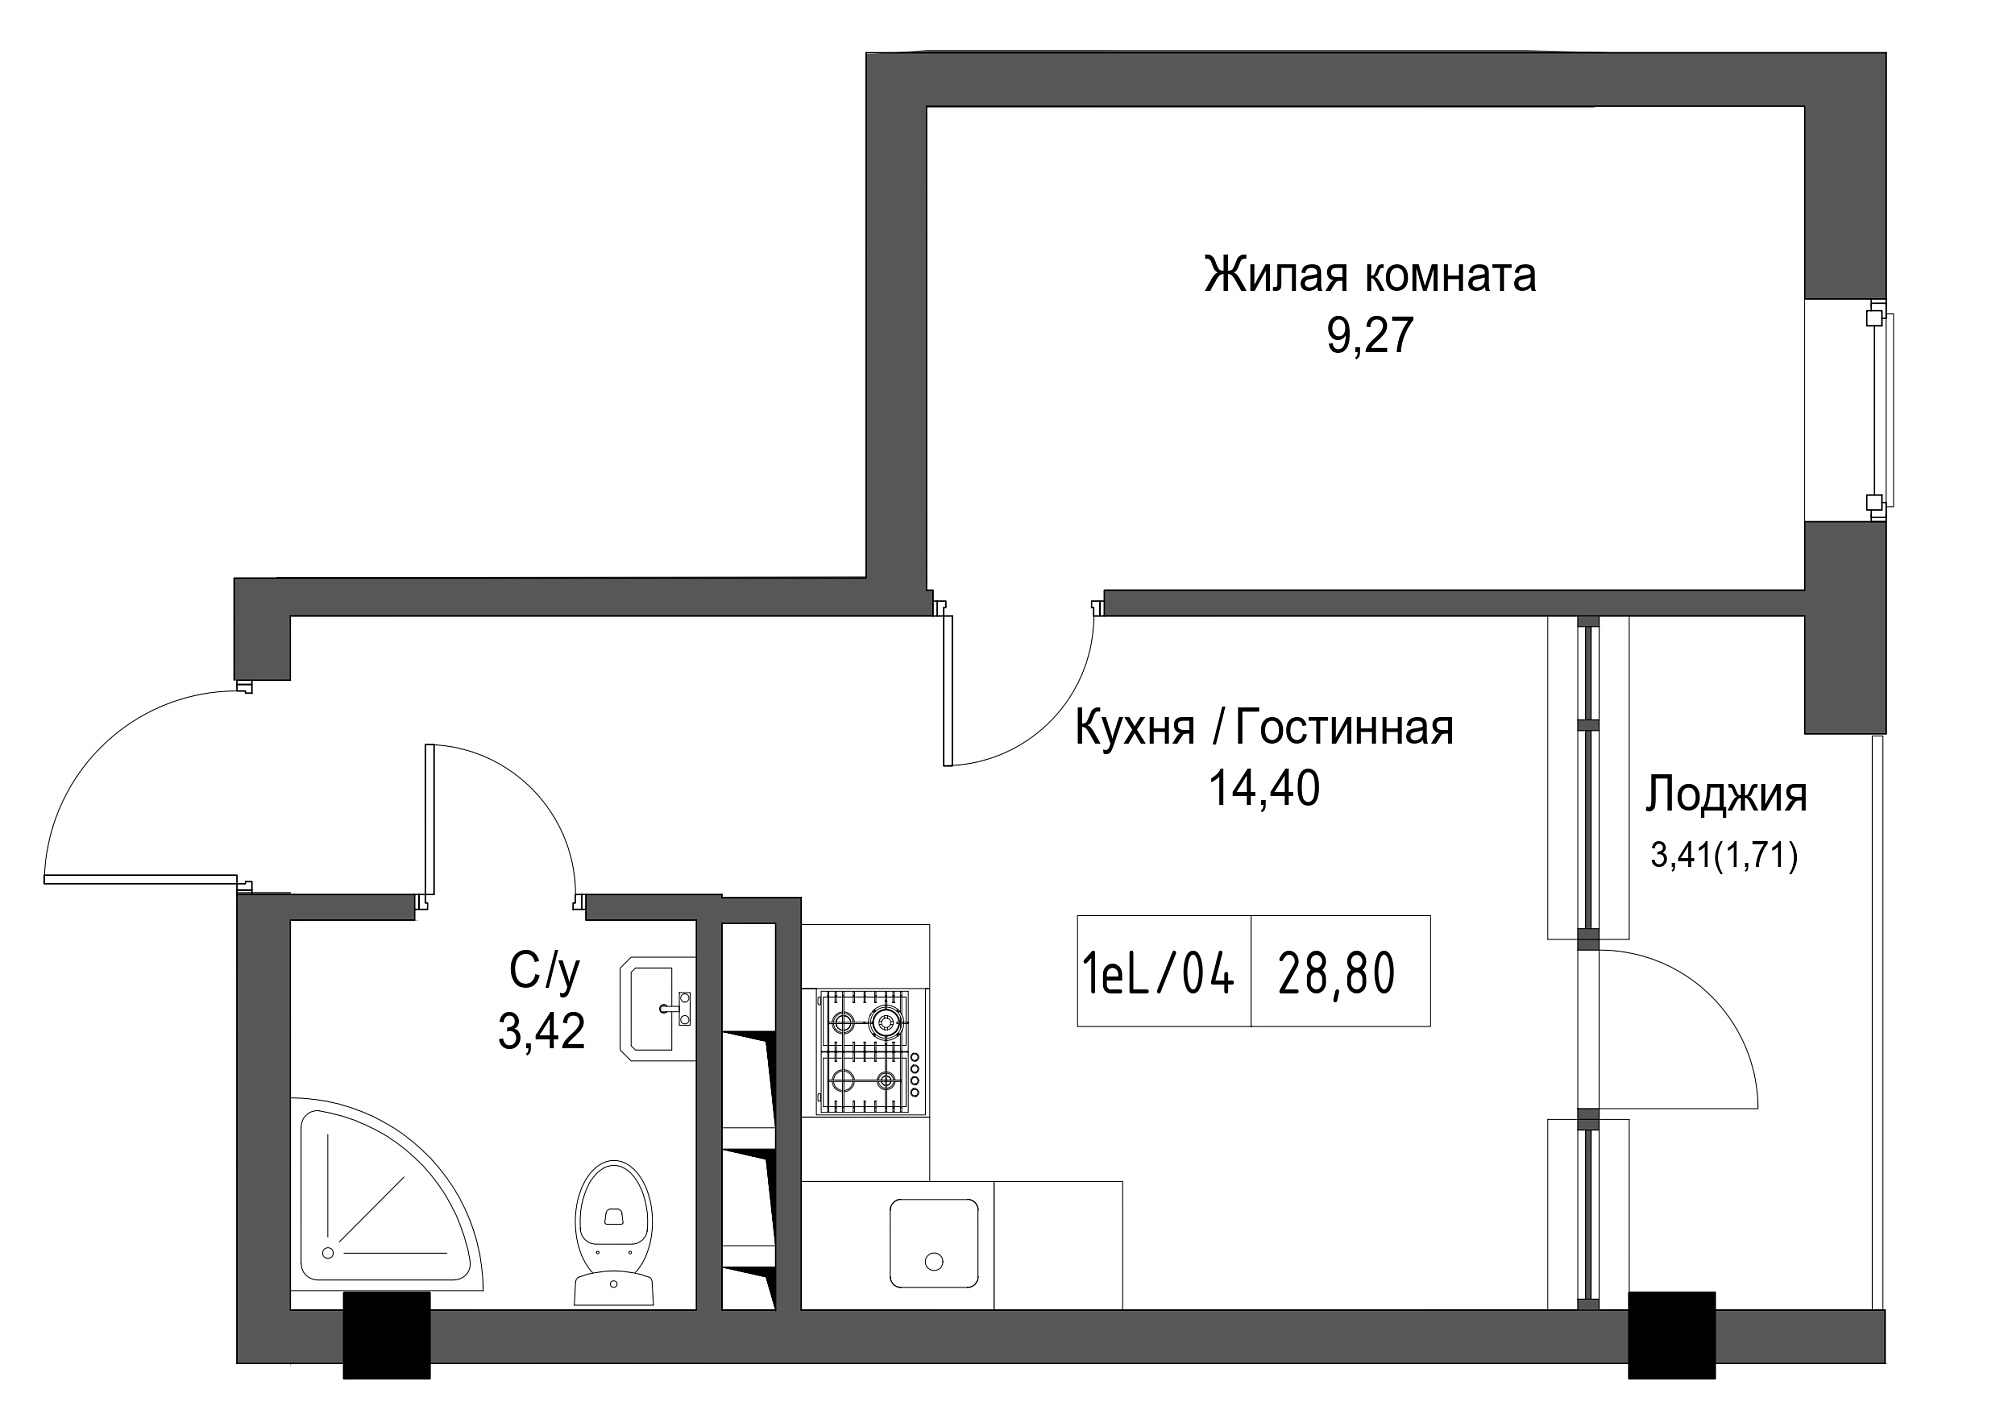 Планування 1-к квартира площею 28.8м2, UM-002-02/0090.